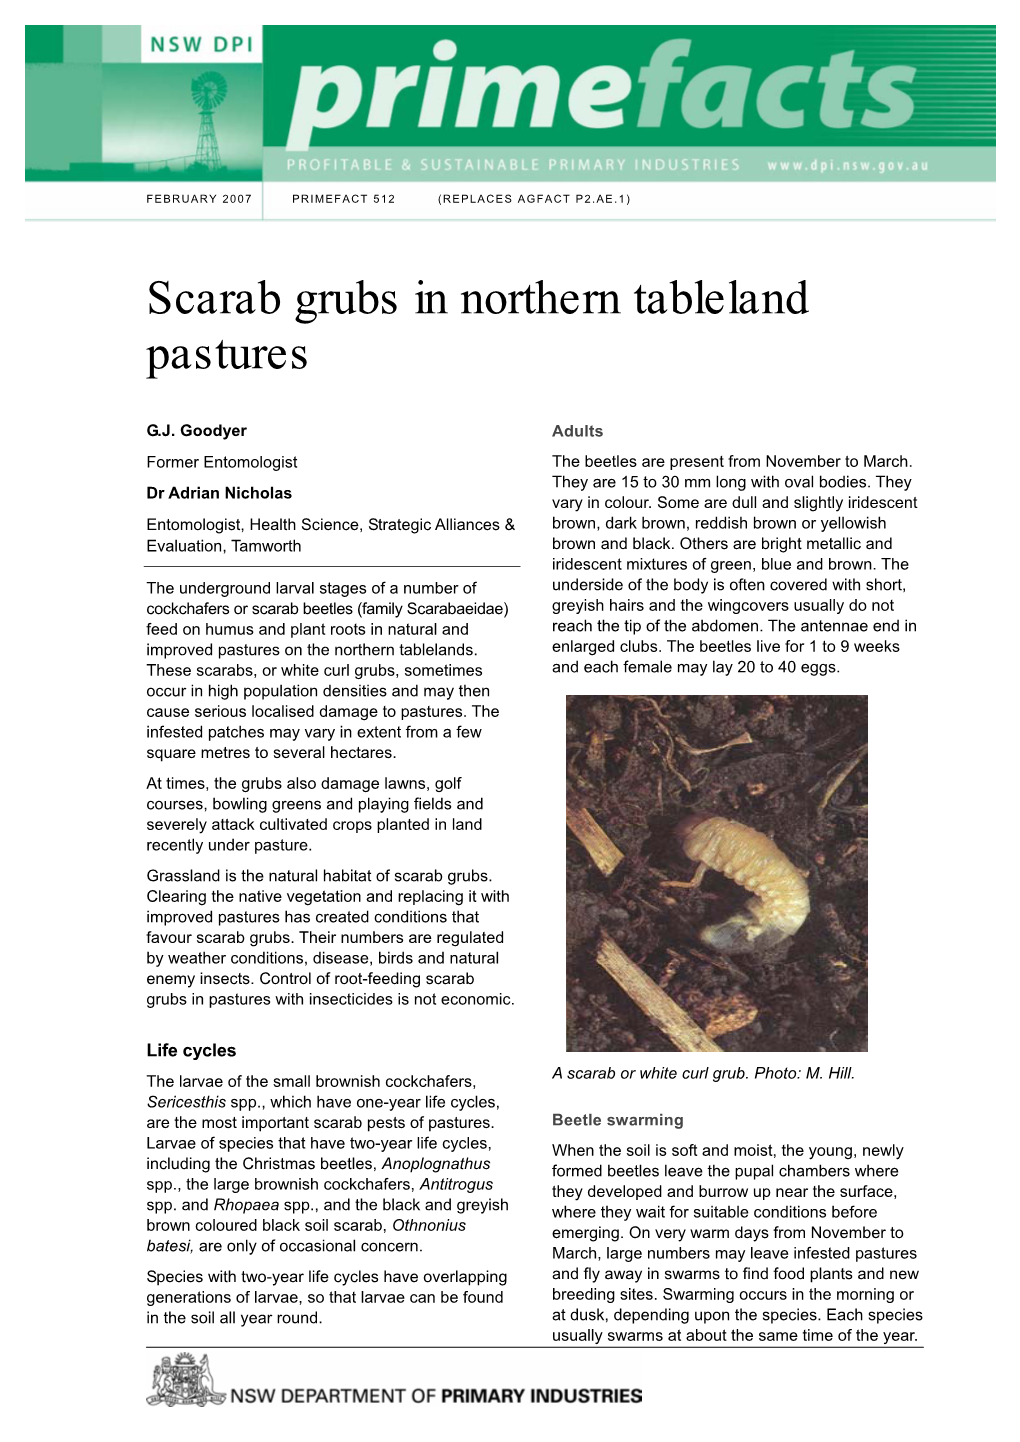 Scarab Grubs in Northern Tableland Pastures